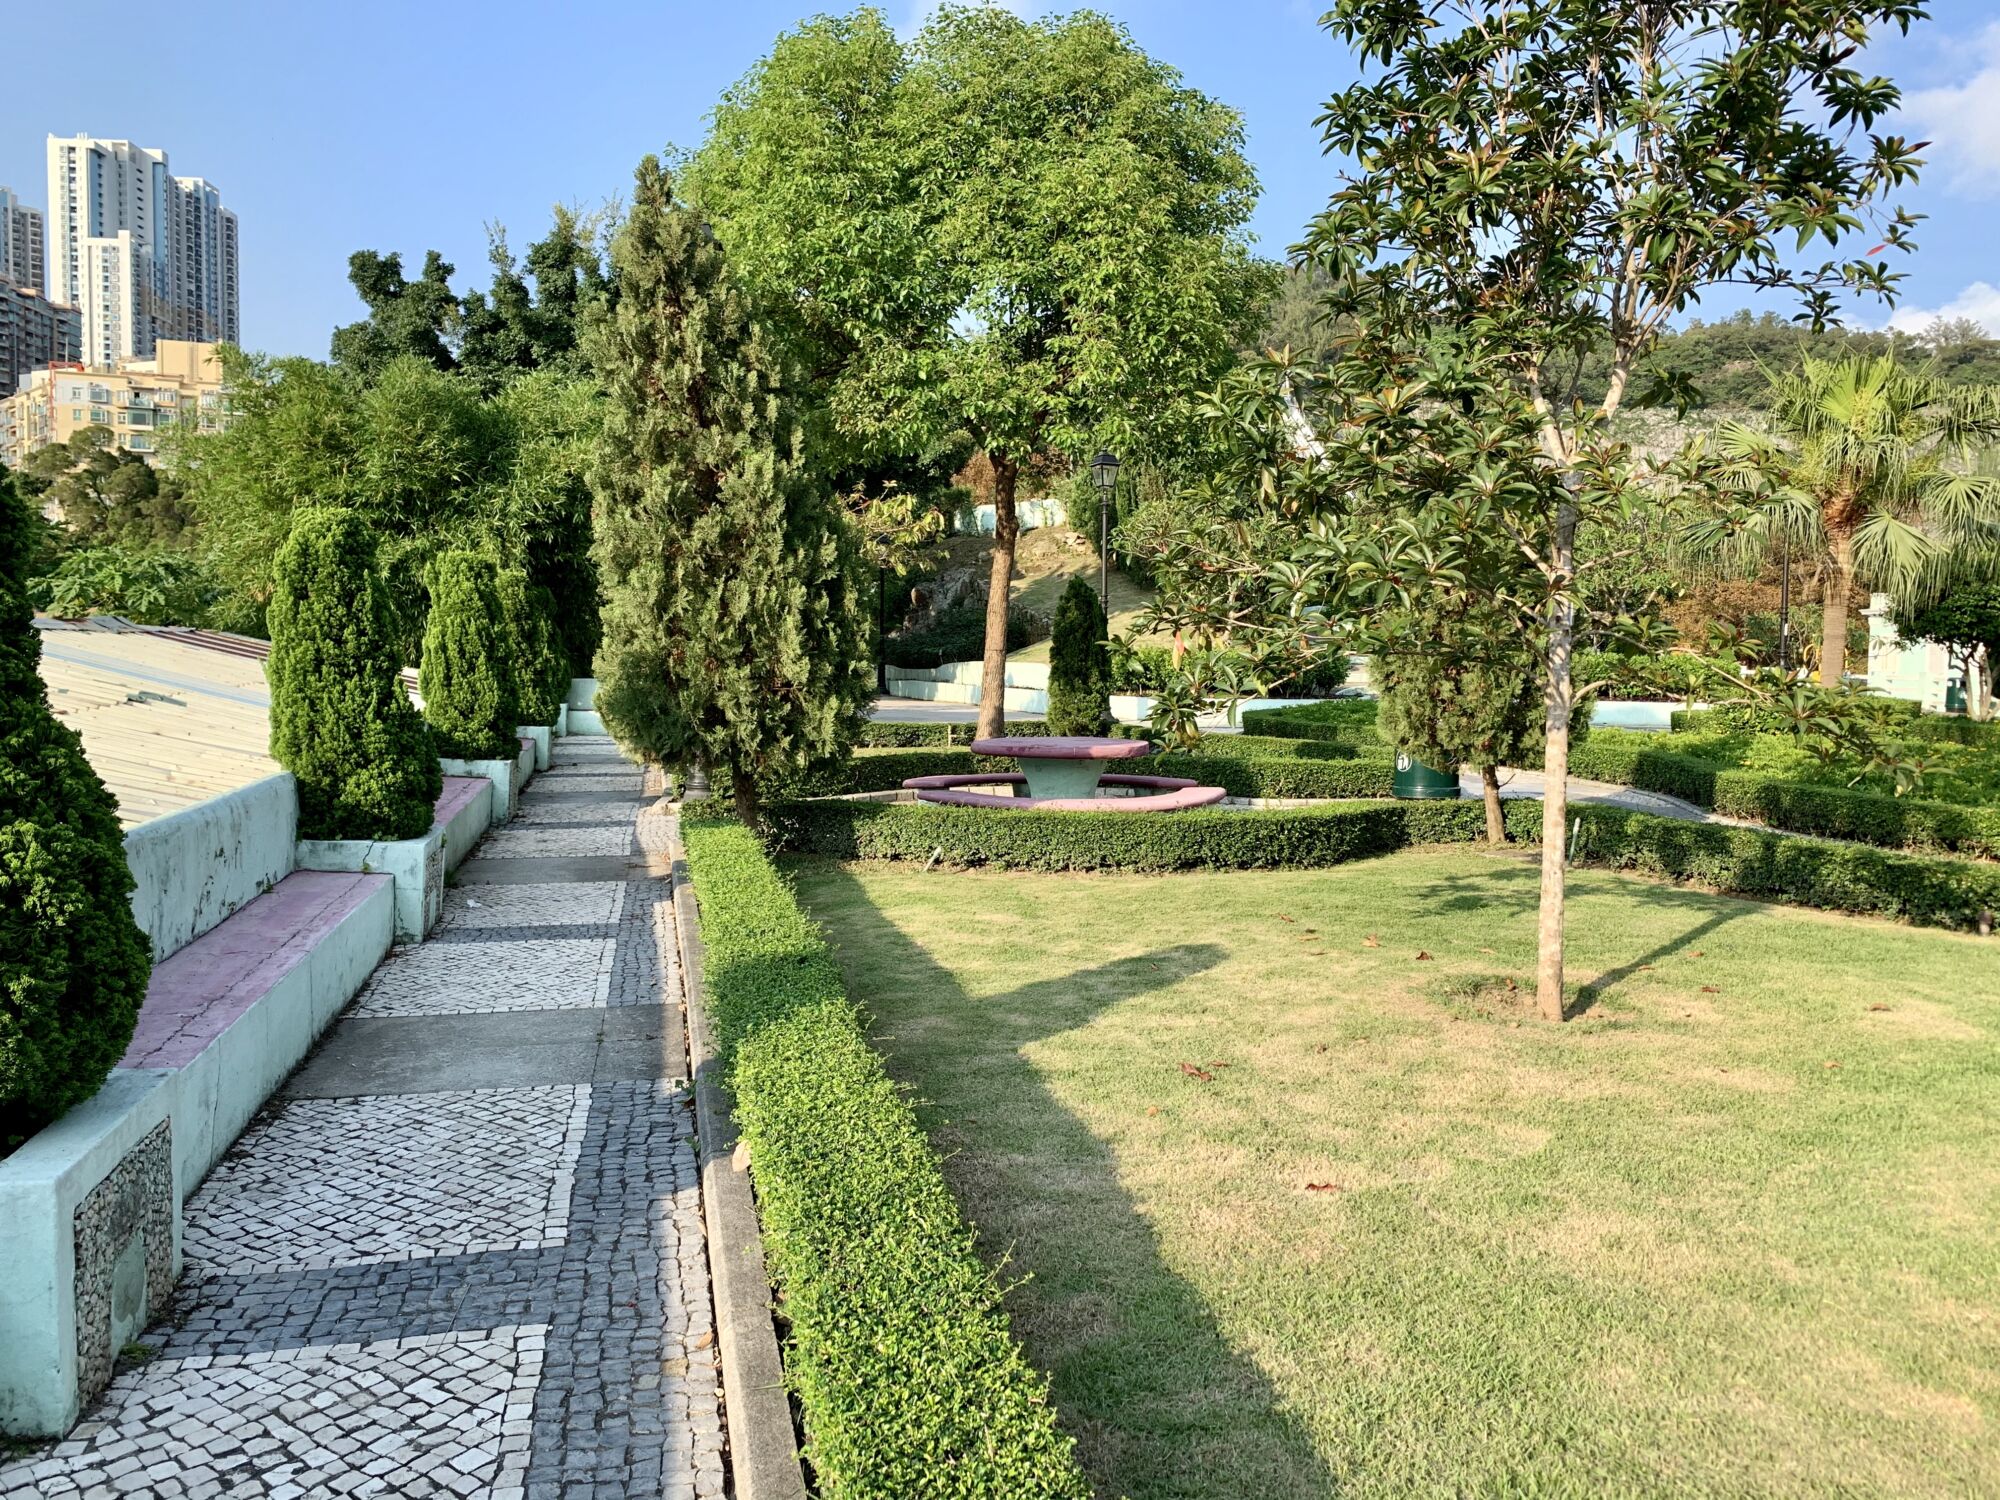 Carmo Municipal Garden Lawned Area Macau Lifestyle